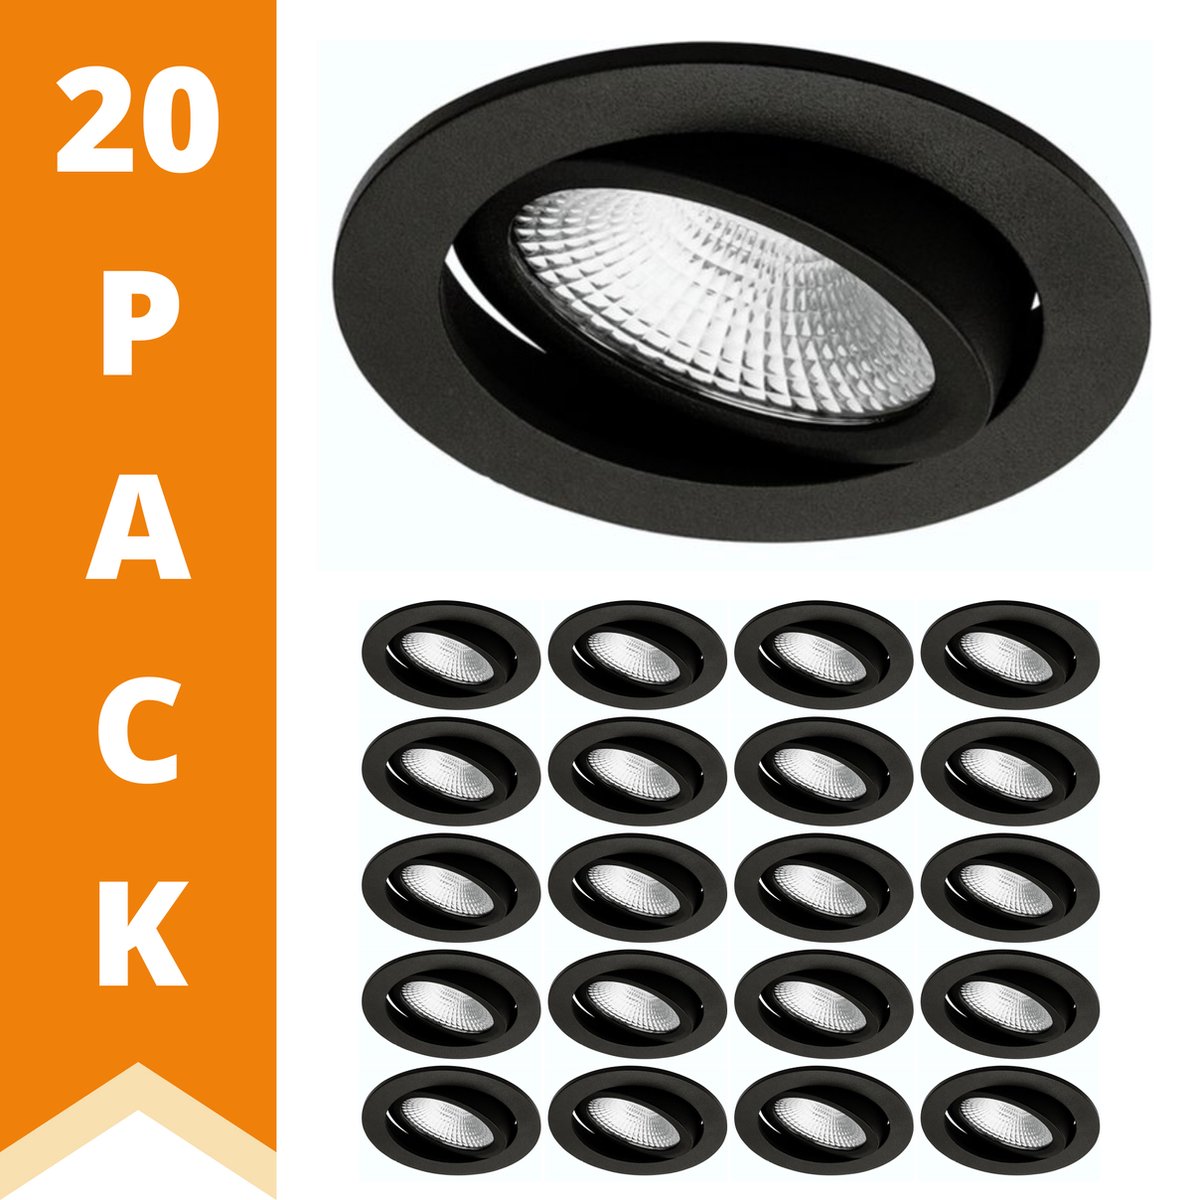 LongLife LED inbouwspots zwart - Dimbaar warm wit licht - Spatwaterdicht - 20 stuks